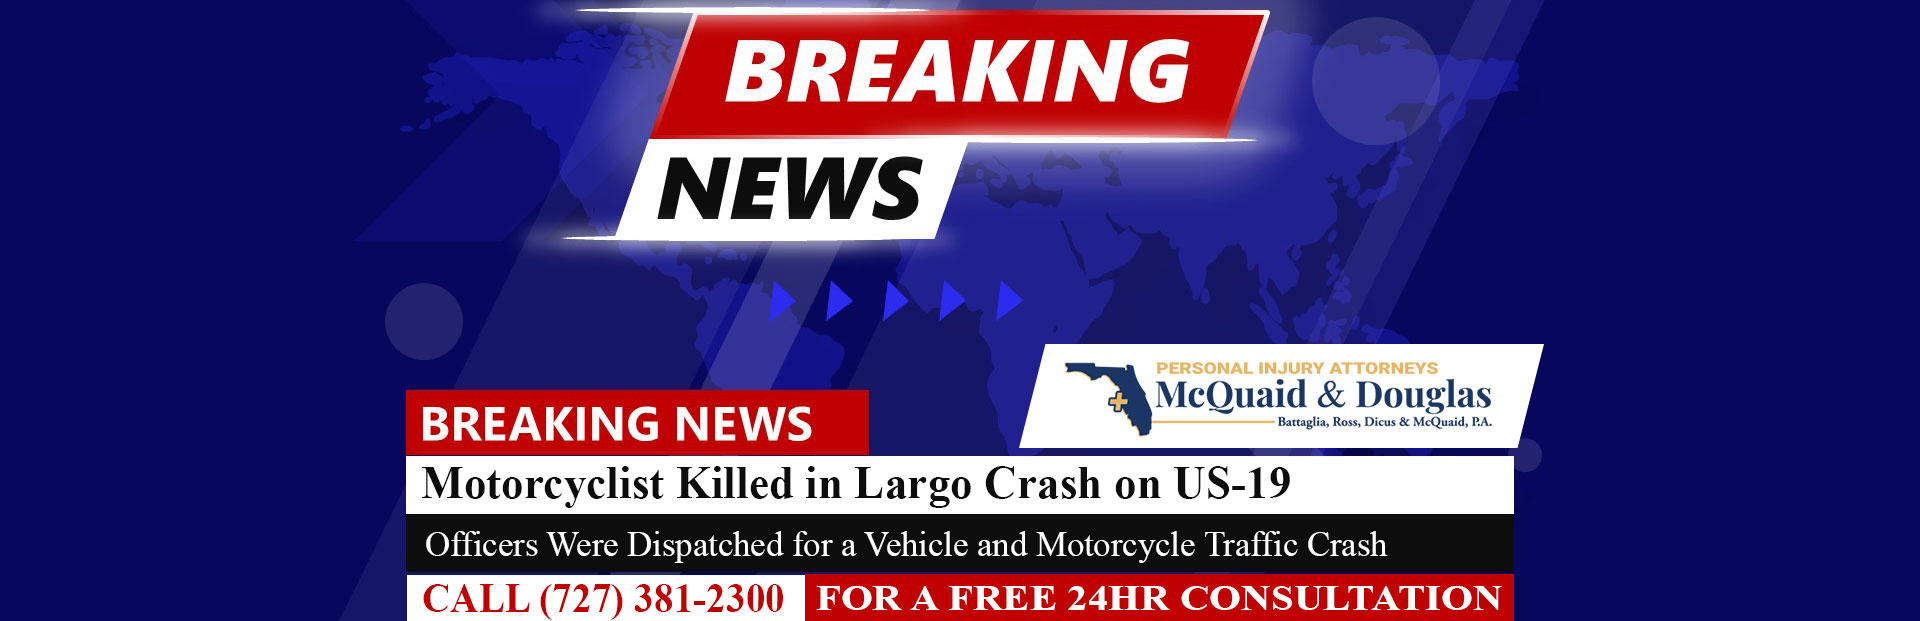 [6-29-22] Motorcyclist Killed in Largo Crash on US-19 Tuesday Morning